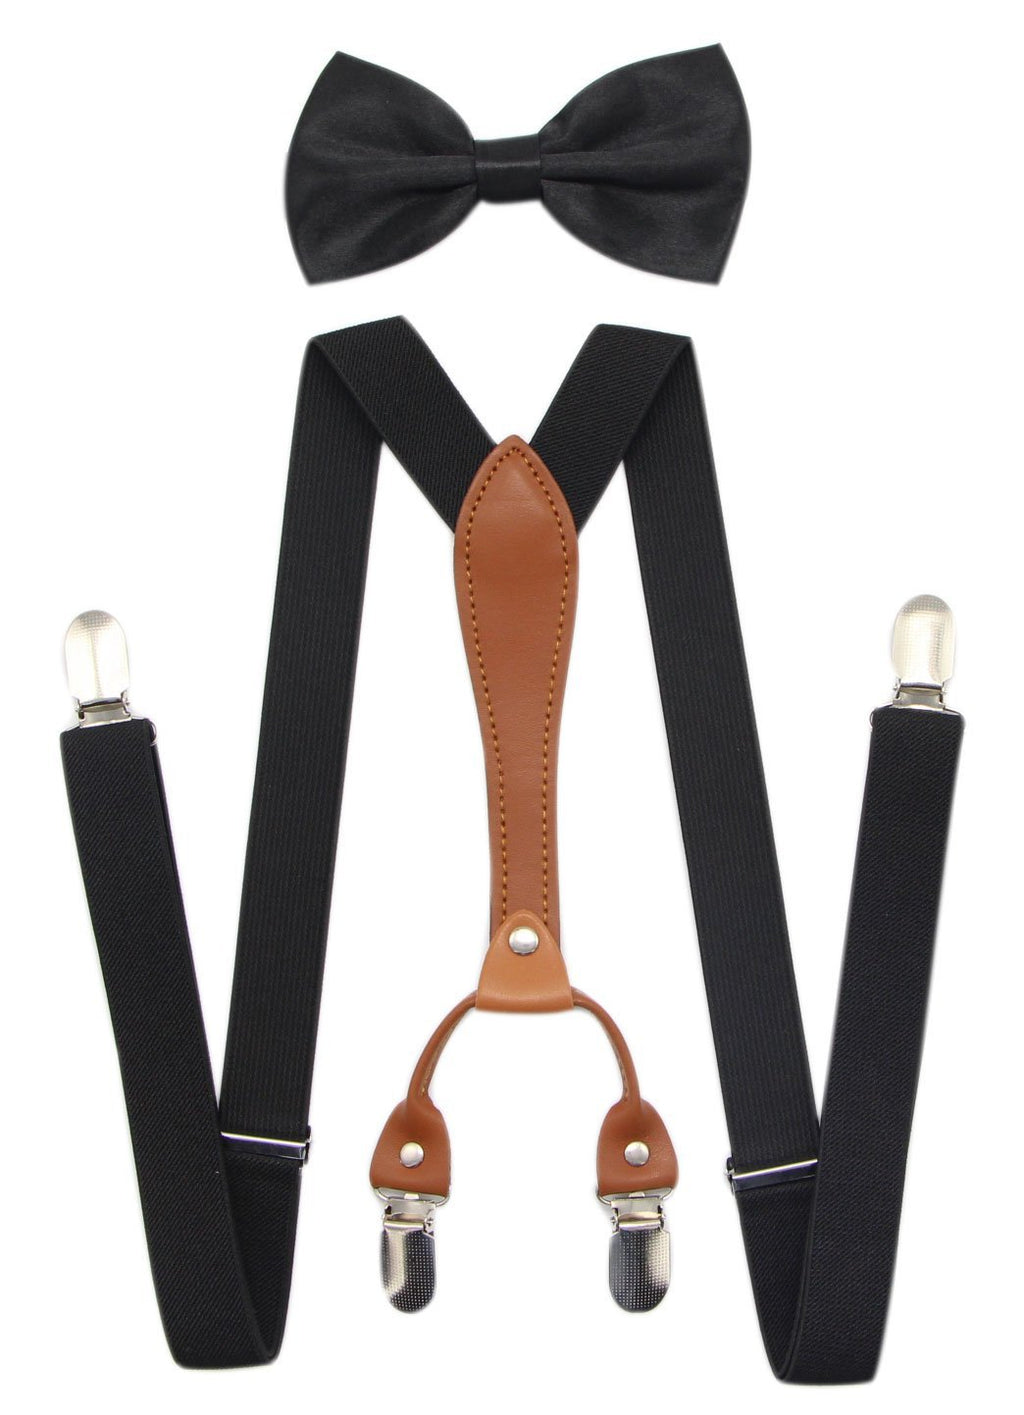 [Australia] - JAIFEI Suspenders & Bowtie Set- Men's Elastic X Band Suspenders + Bowtie For Wedding, Formal Events Black 